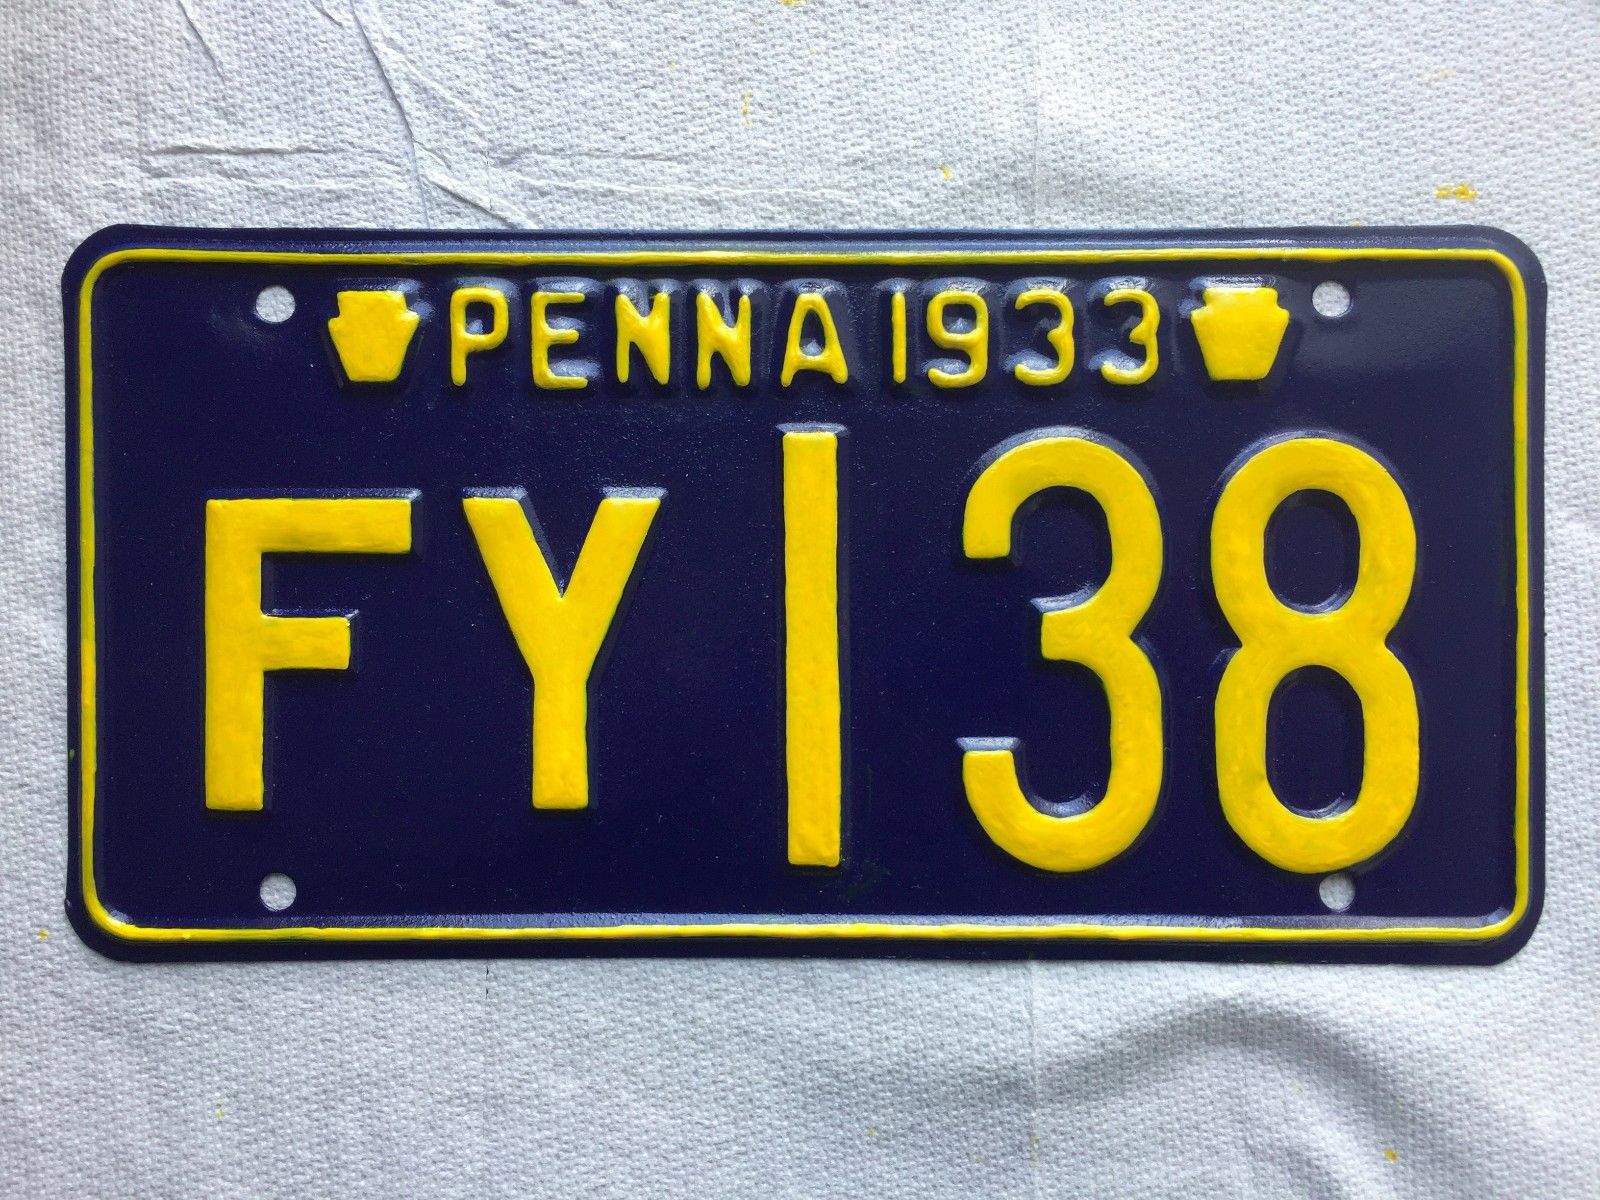 1933 PENNSYLVANIA license plate - SHARP - BRILLIANT antique vintage auto tag!